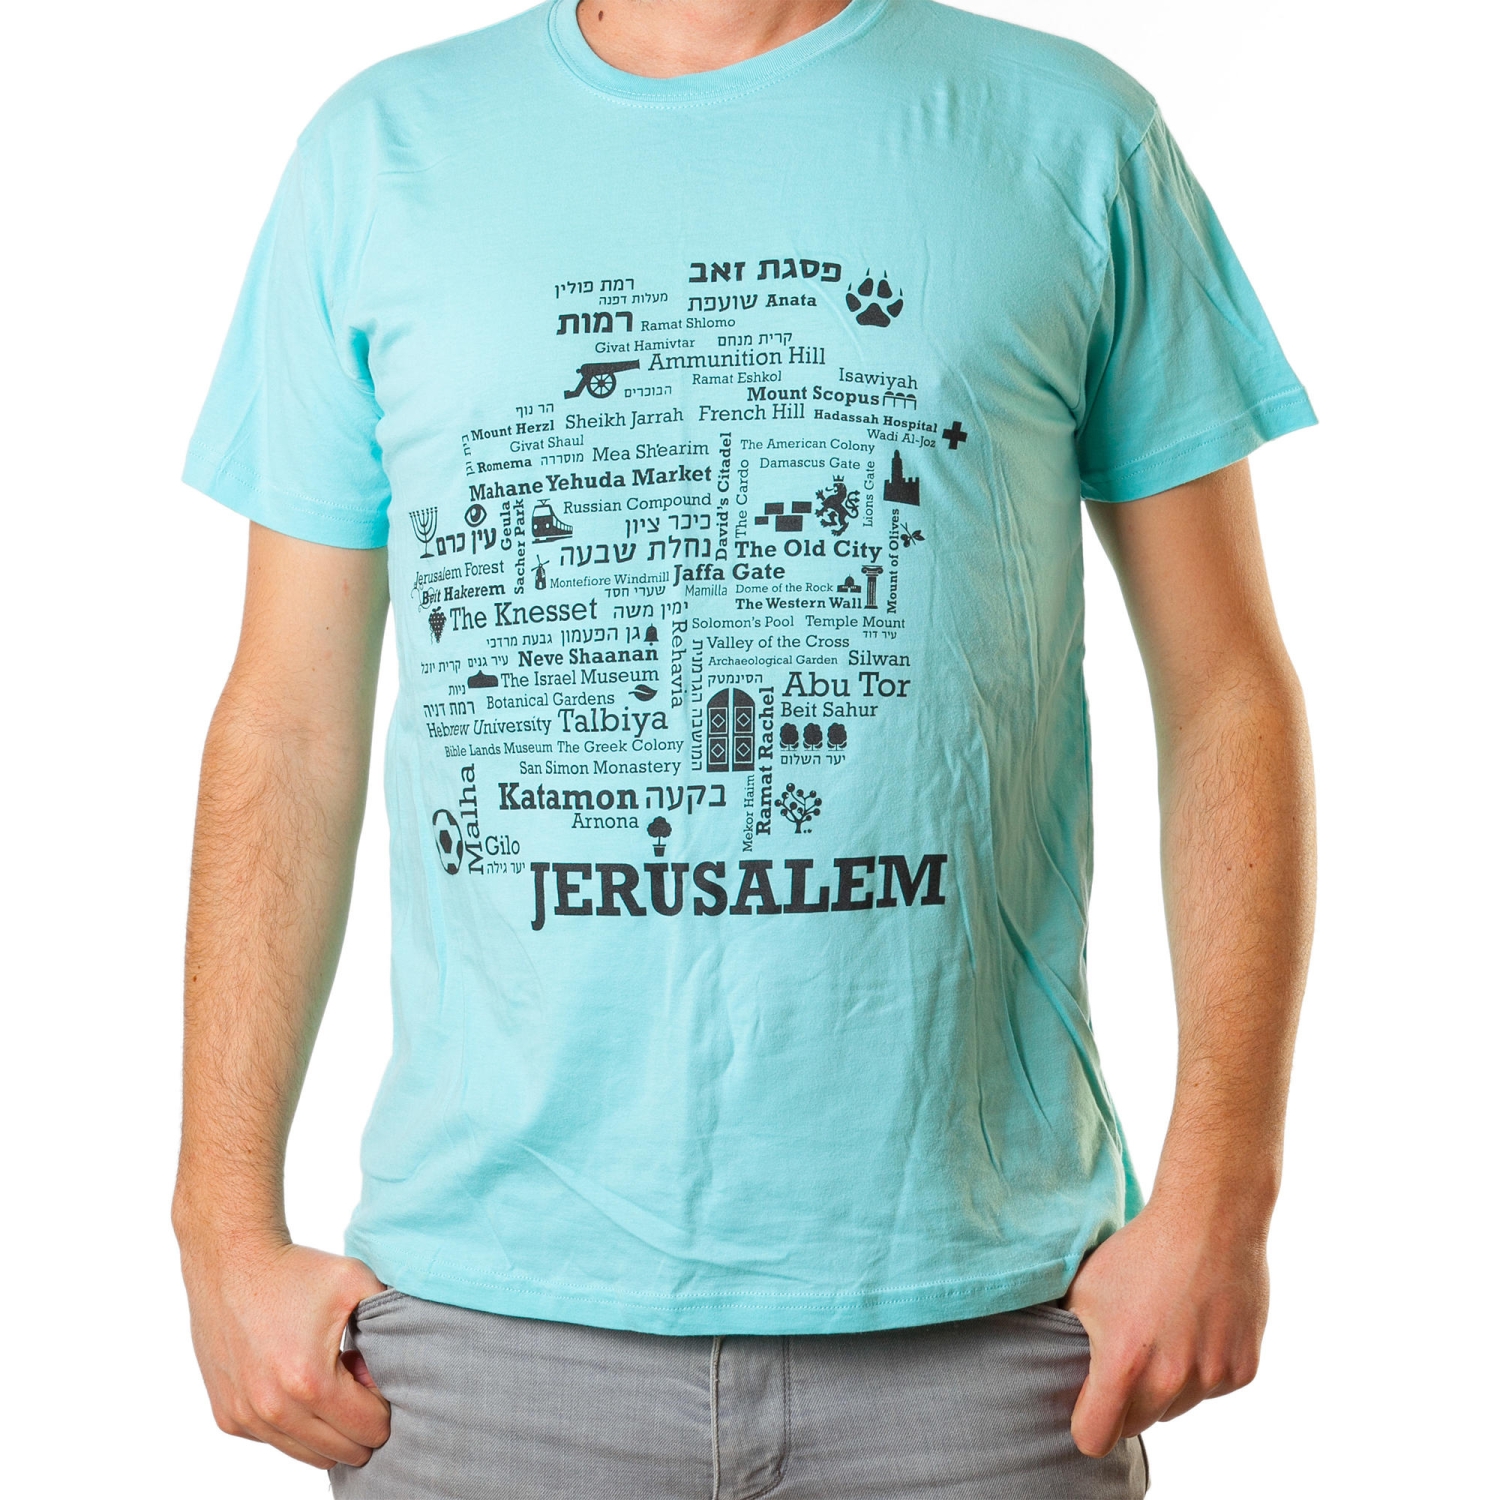 Barbara Shaw T-Shirt - Jerusalem Neighborhoods (Choice of Colors) - 1